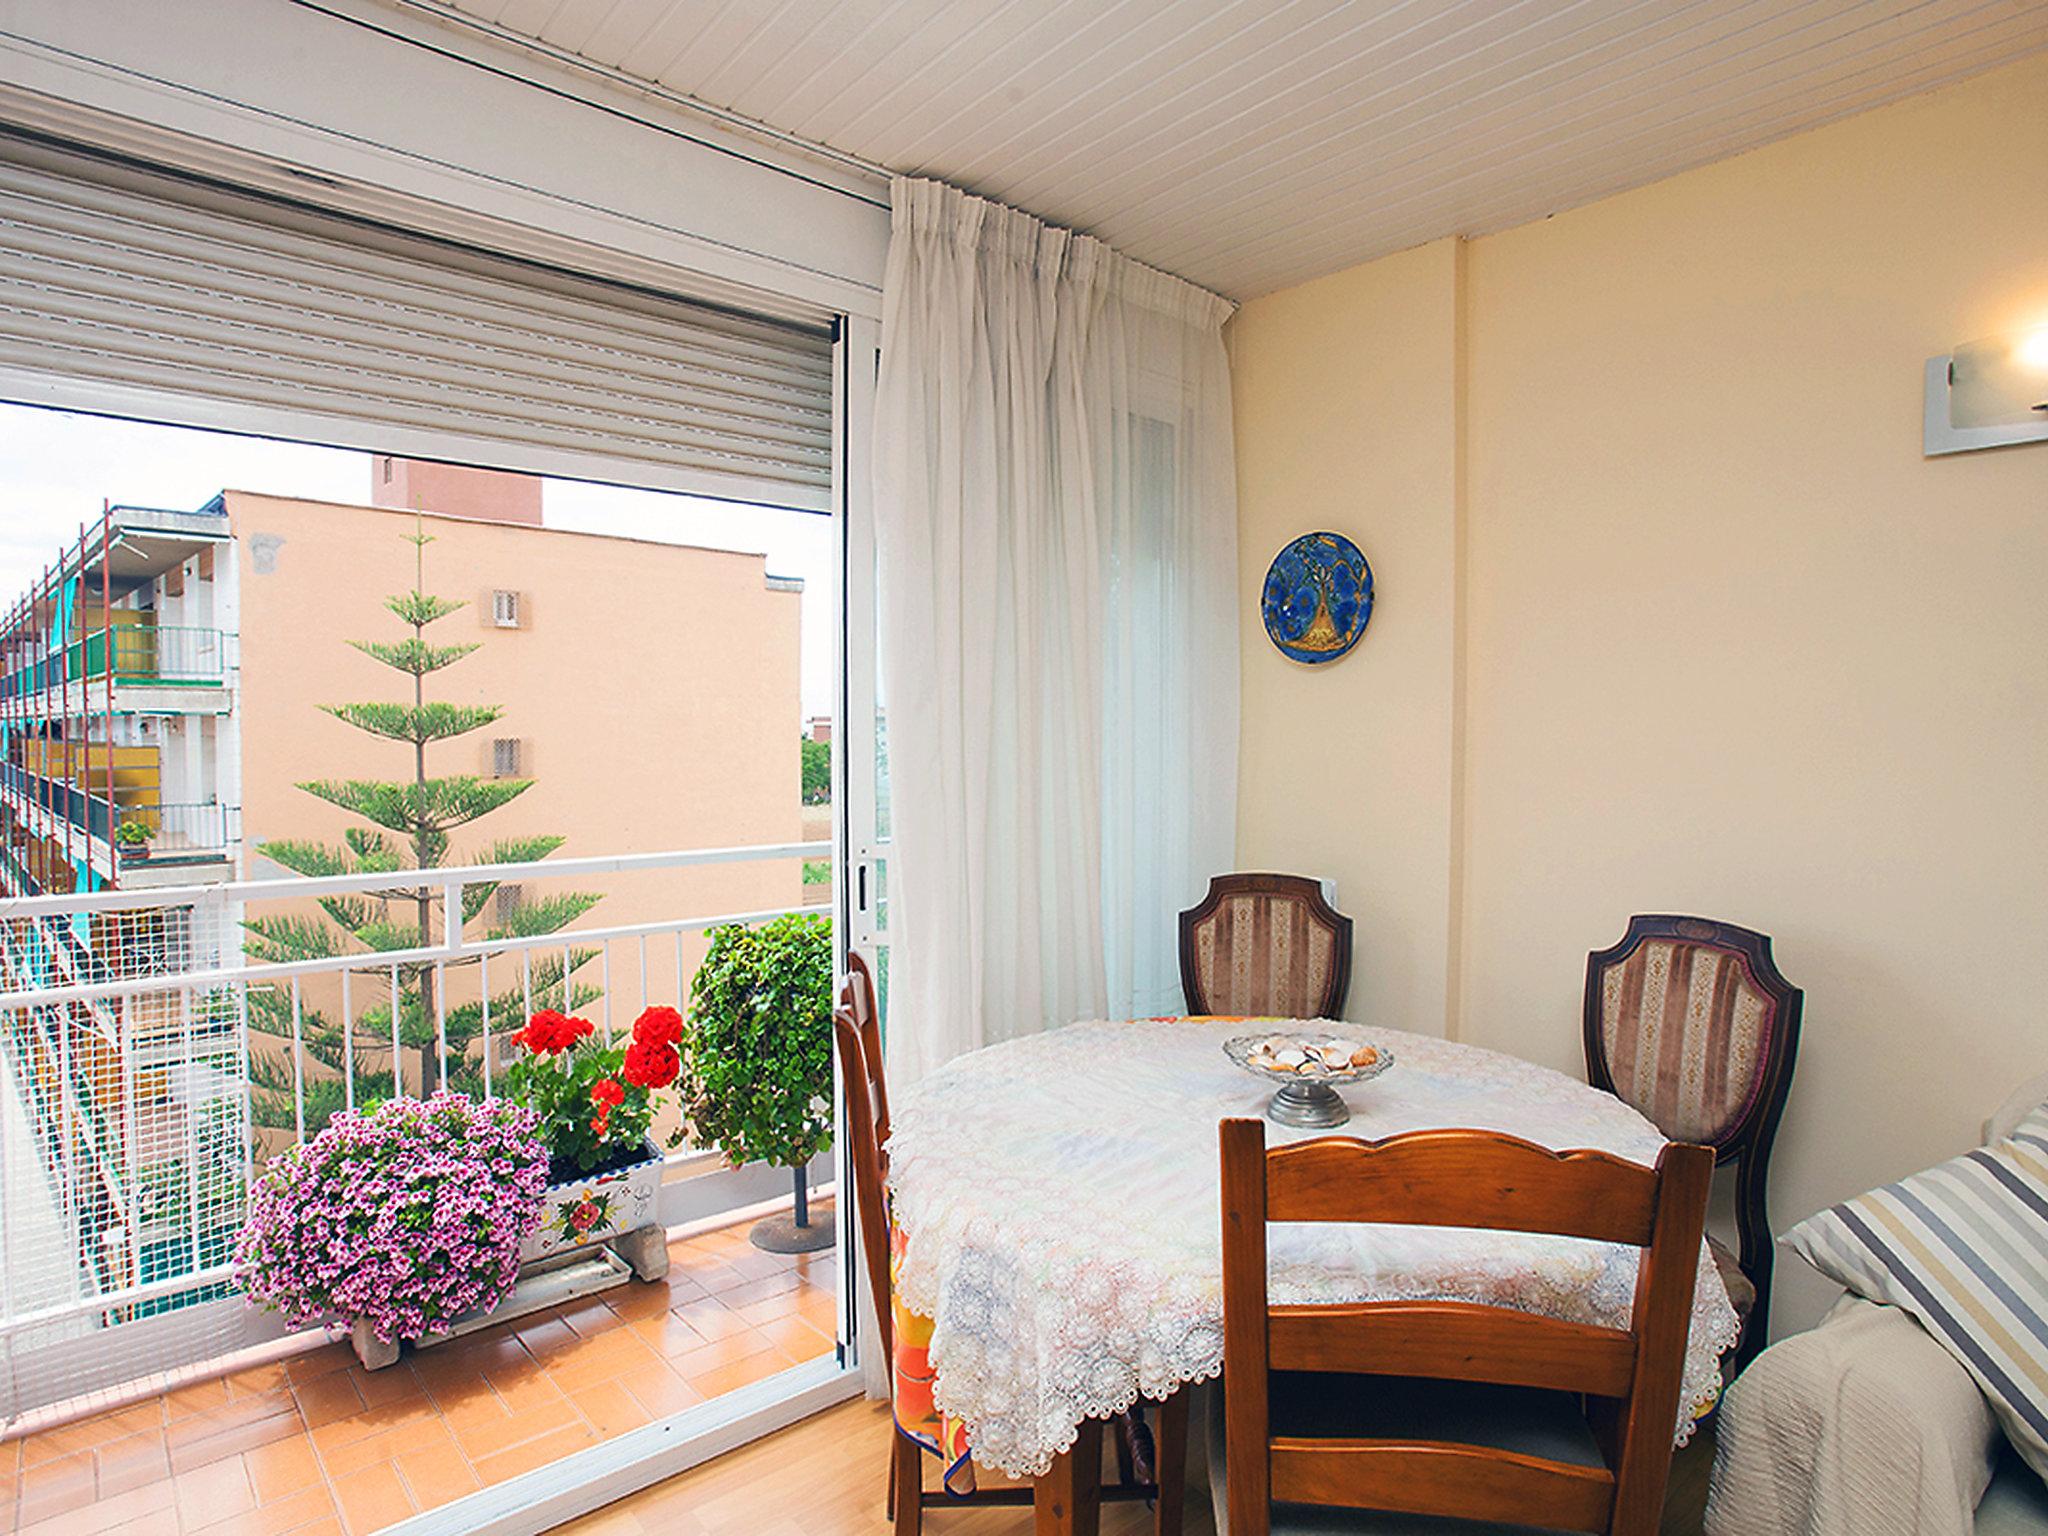 Foto 7 - Appartamento con 2 camere da letto a Sant Andreu de Llavaneres con piscina e giardino